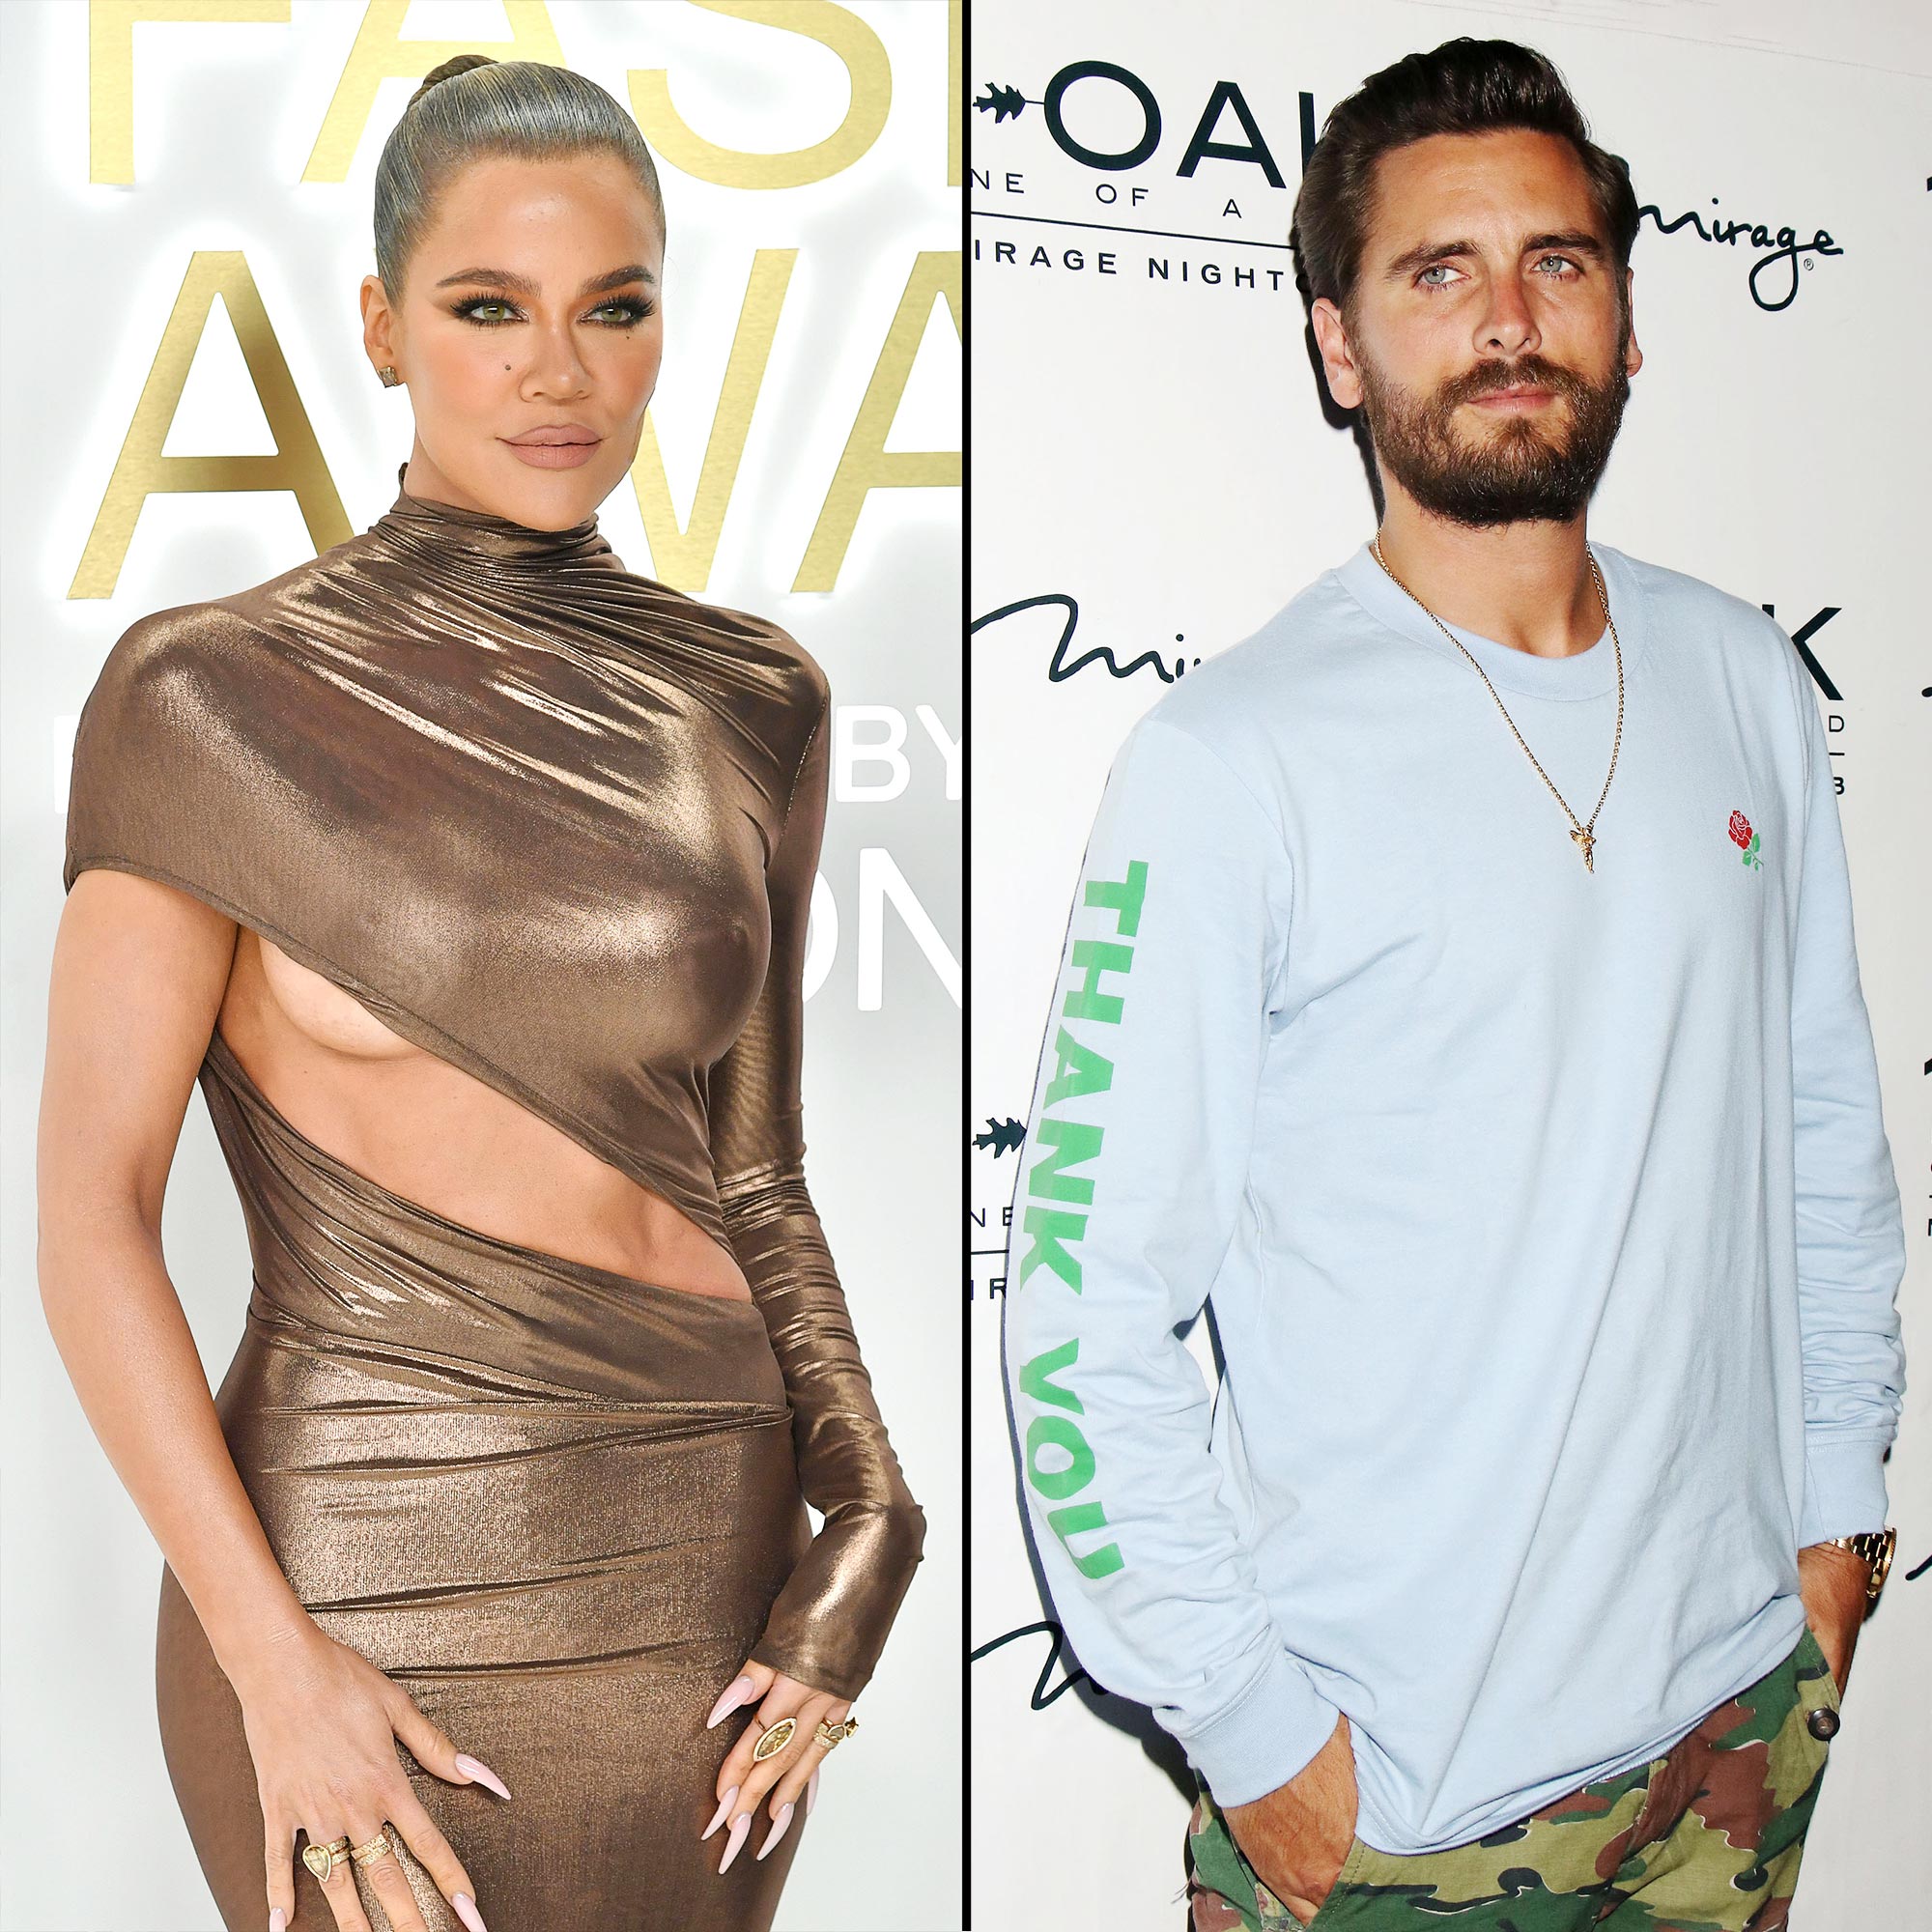 Khloe Kardashian, Scott Disick joke about ‘practice’ date after divorce Tristan